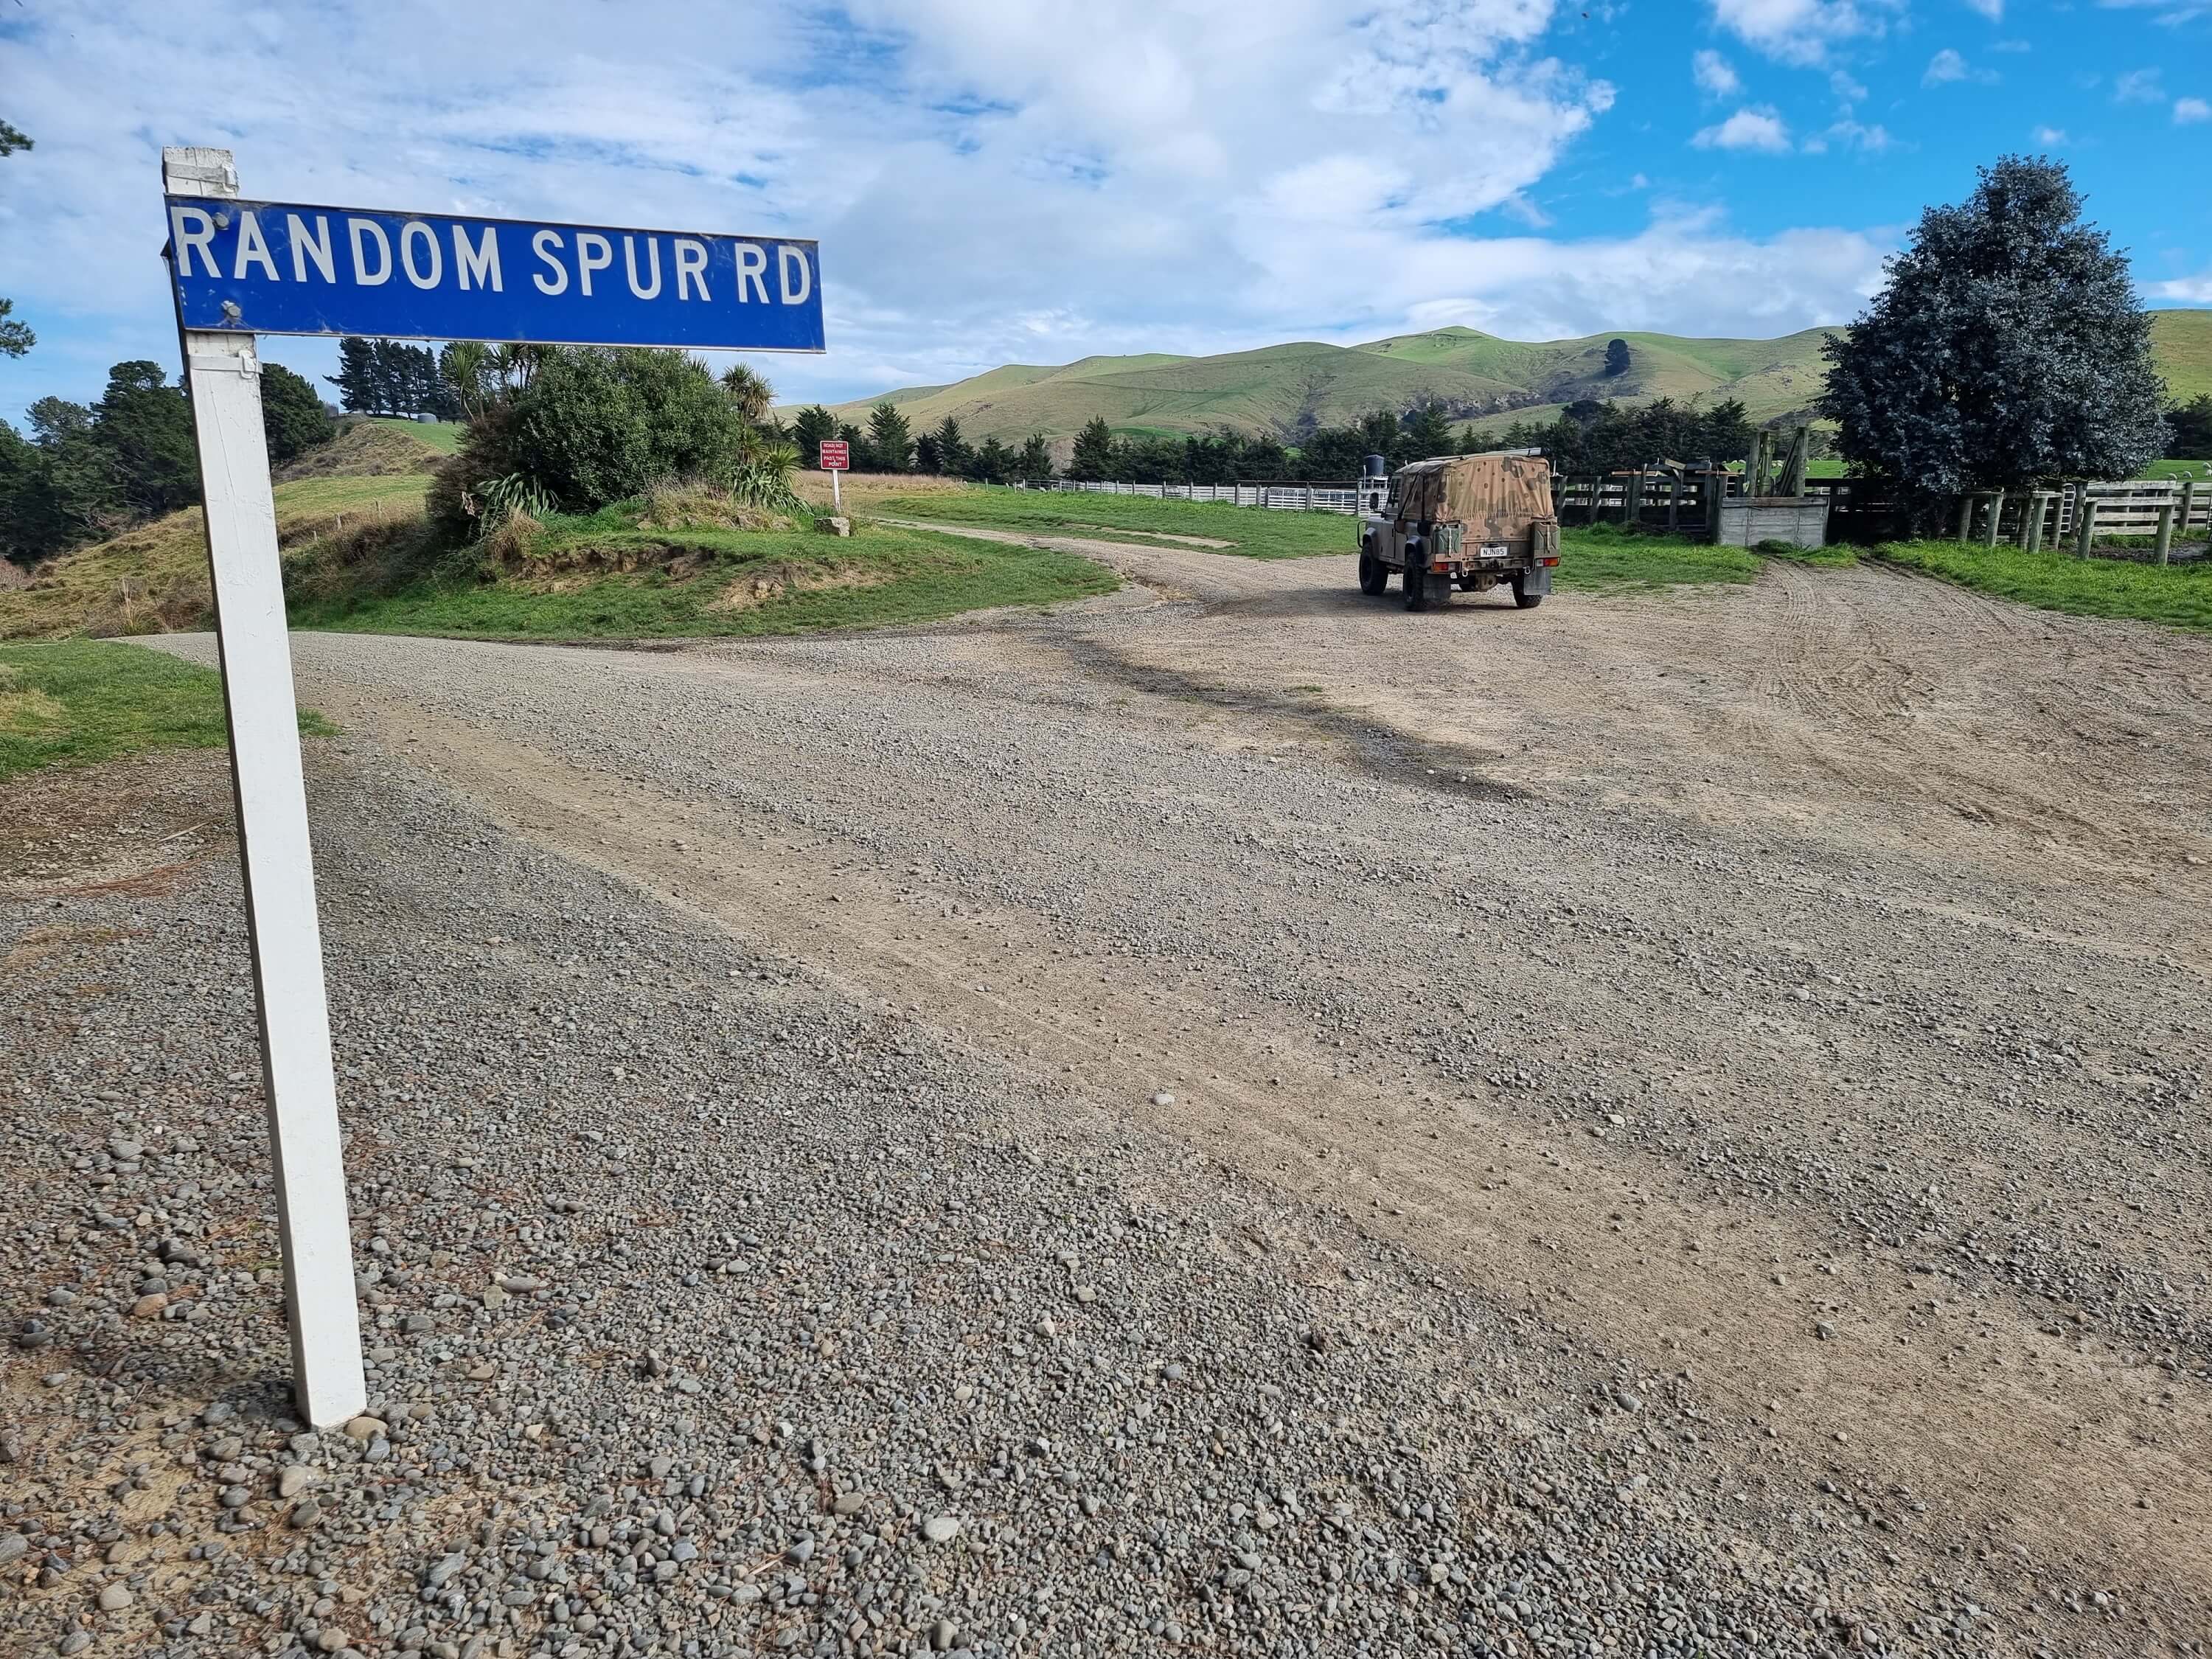 random spur road entrance with land rover perentie